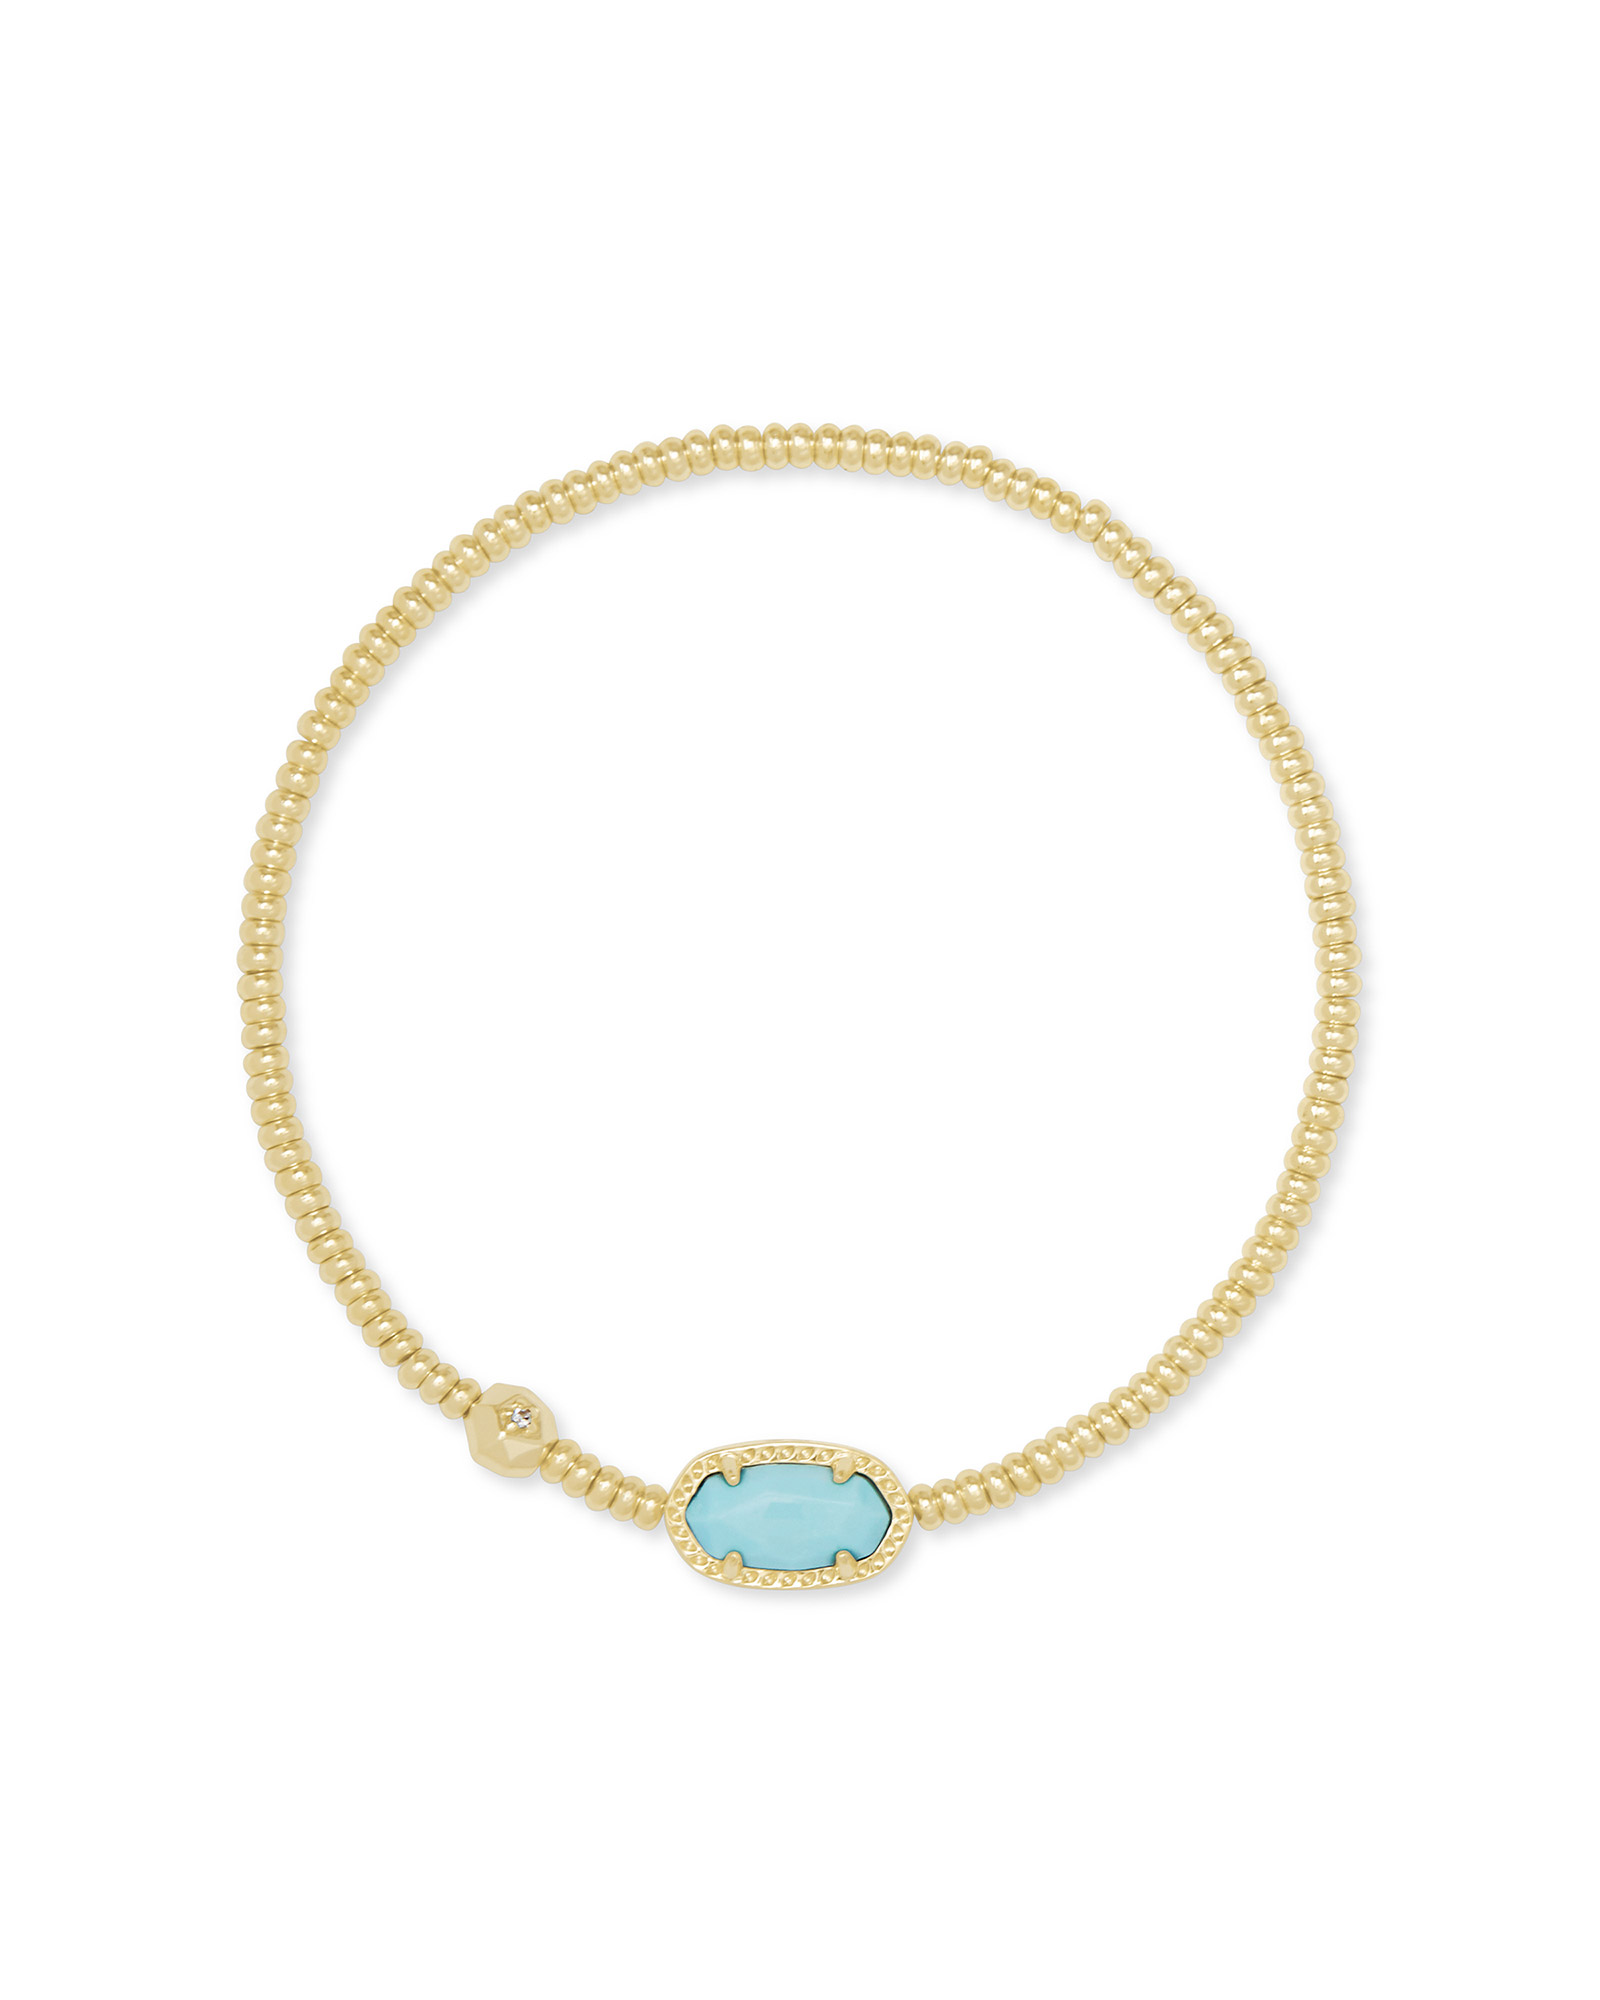 Grayson Gold Stretch Bracelet in Light Blue Magnesite | Kendra Scott